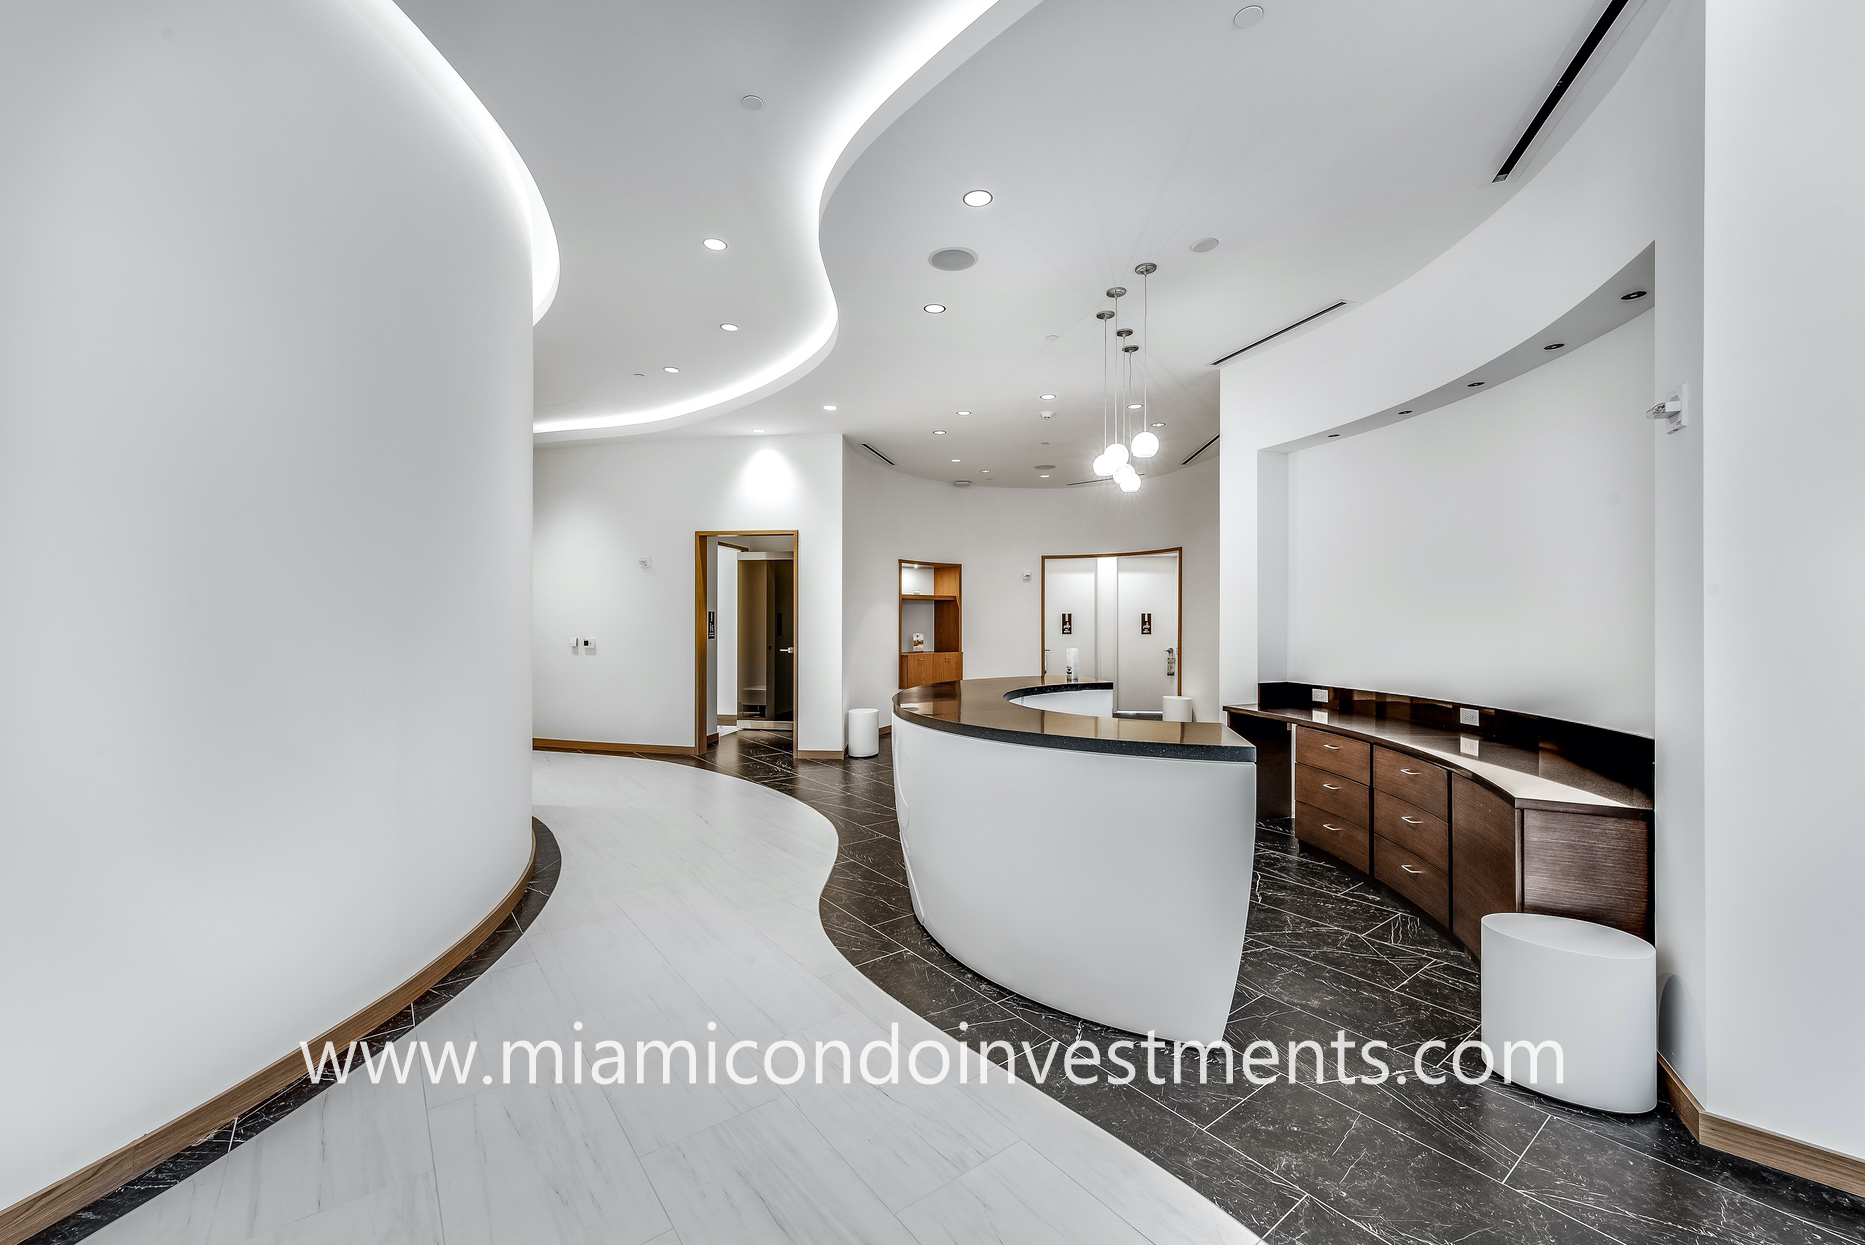 Paramount Miami spa reception desk